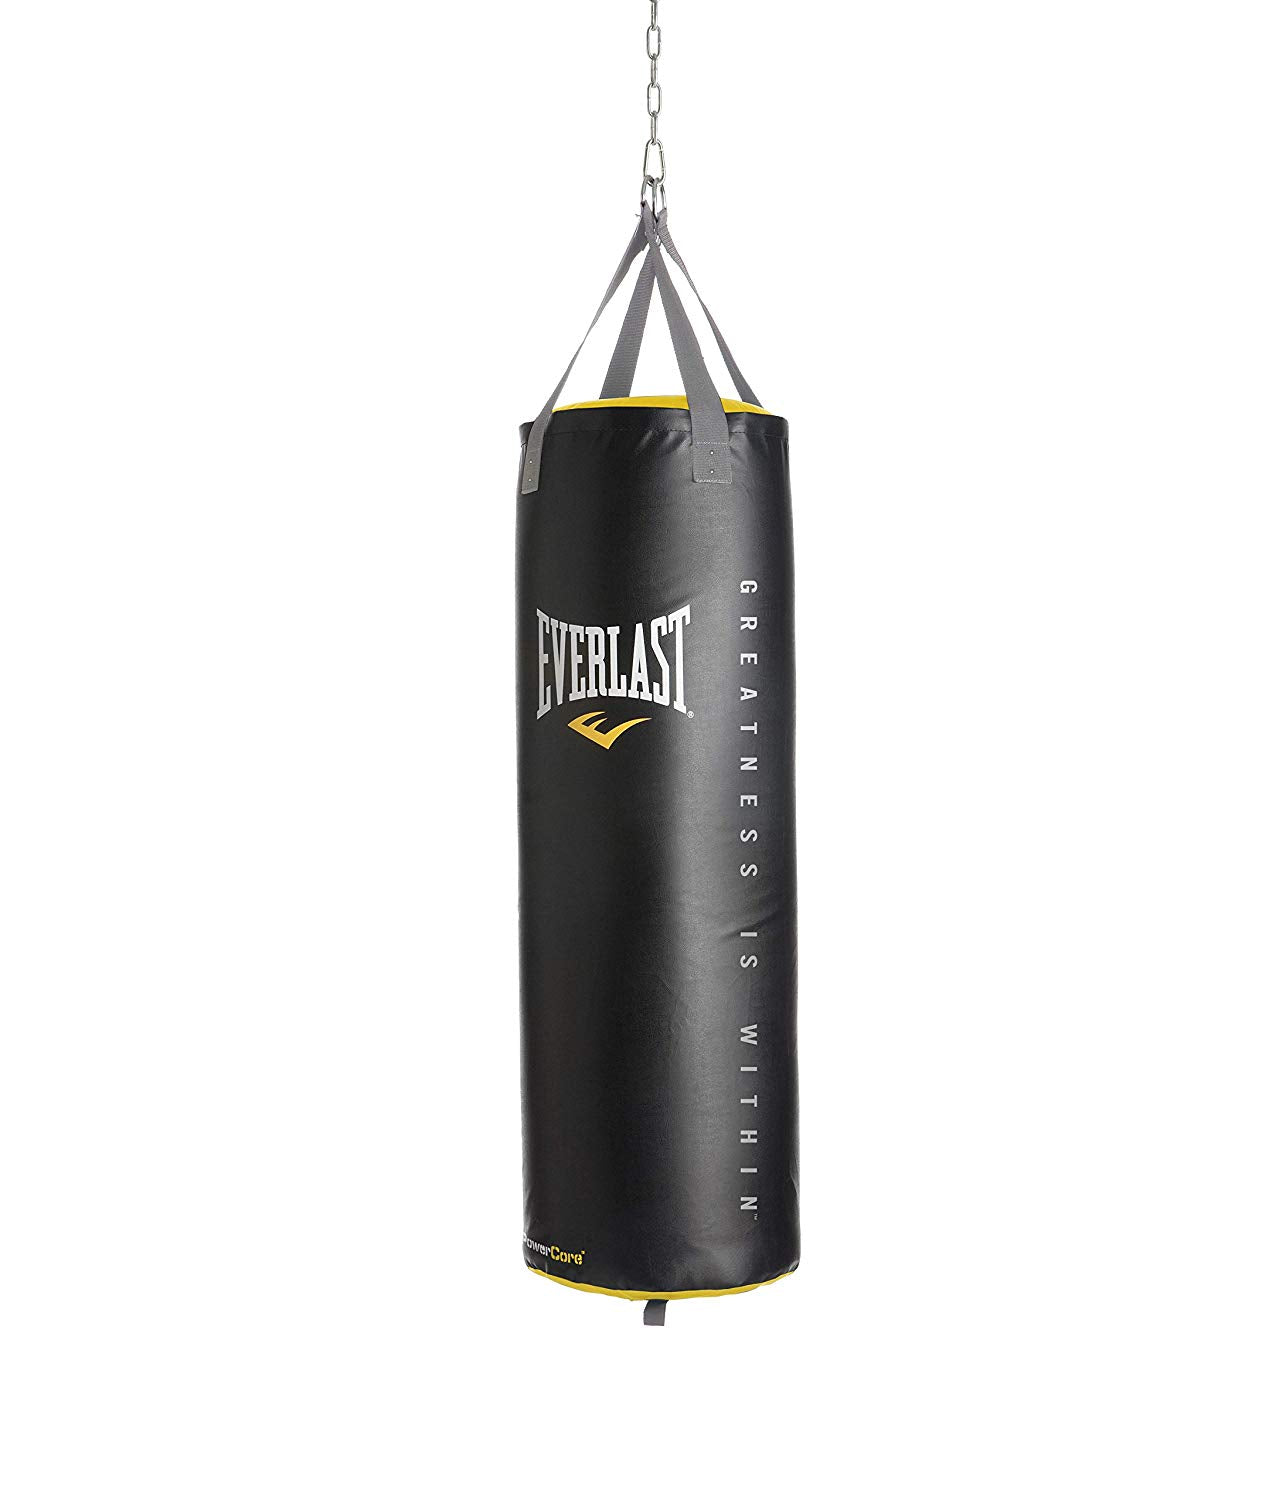 Everlast SH5800WB Powercore Nevatear Shell Boxing Punching Bag (Black) - Best Price online Prokicksports.com